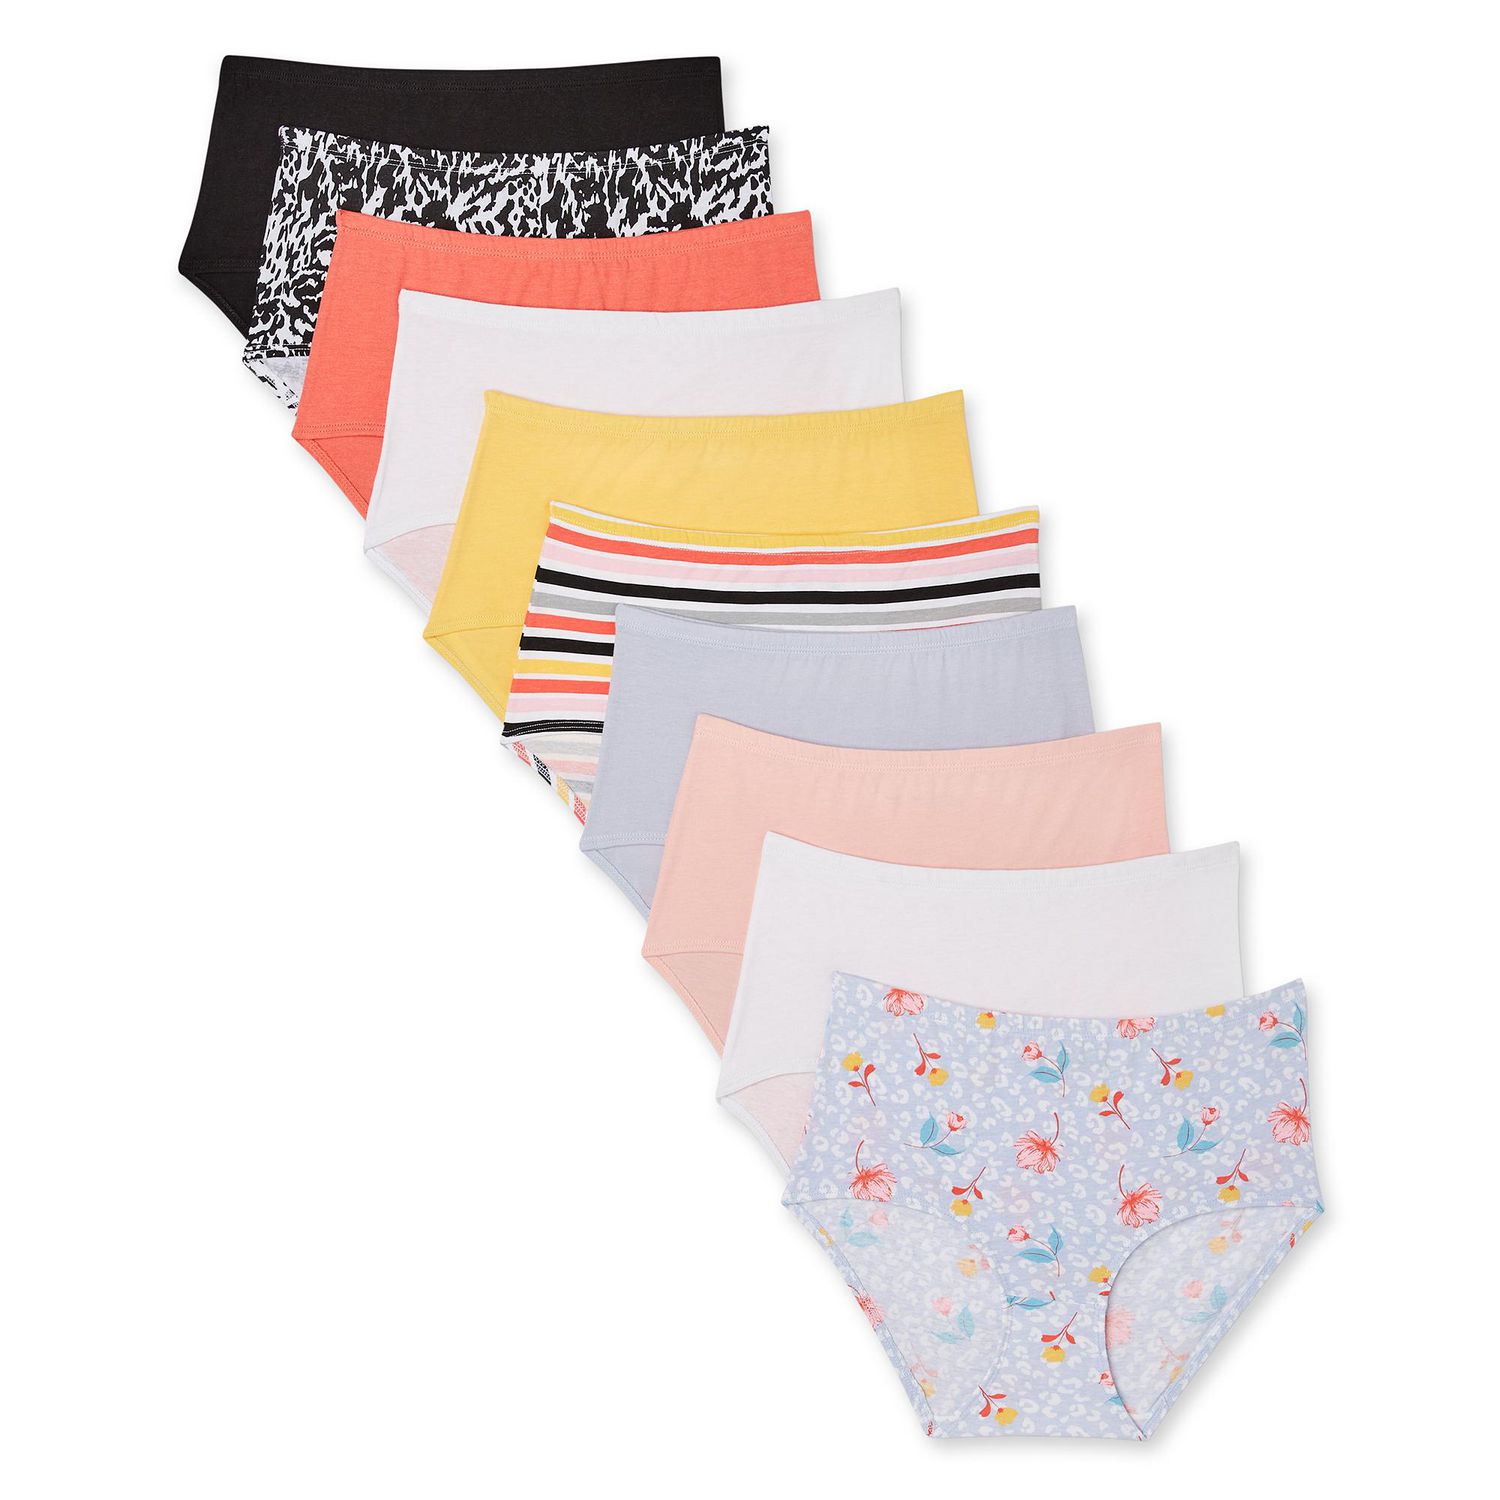 48 Wholesale Womens Cotton Panties Graphic Print Size L - at 